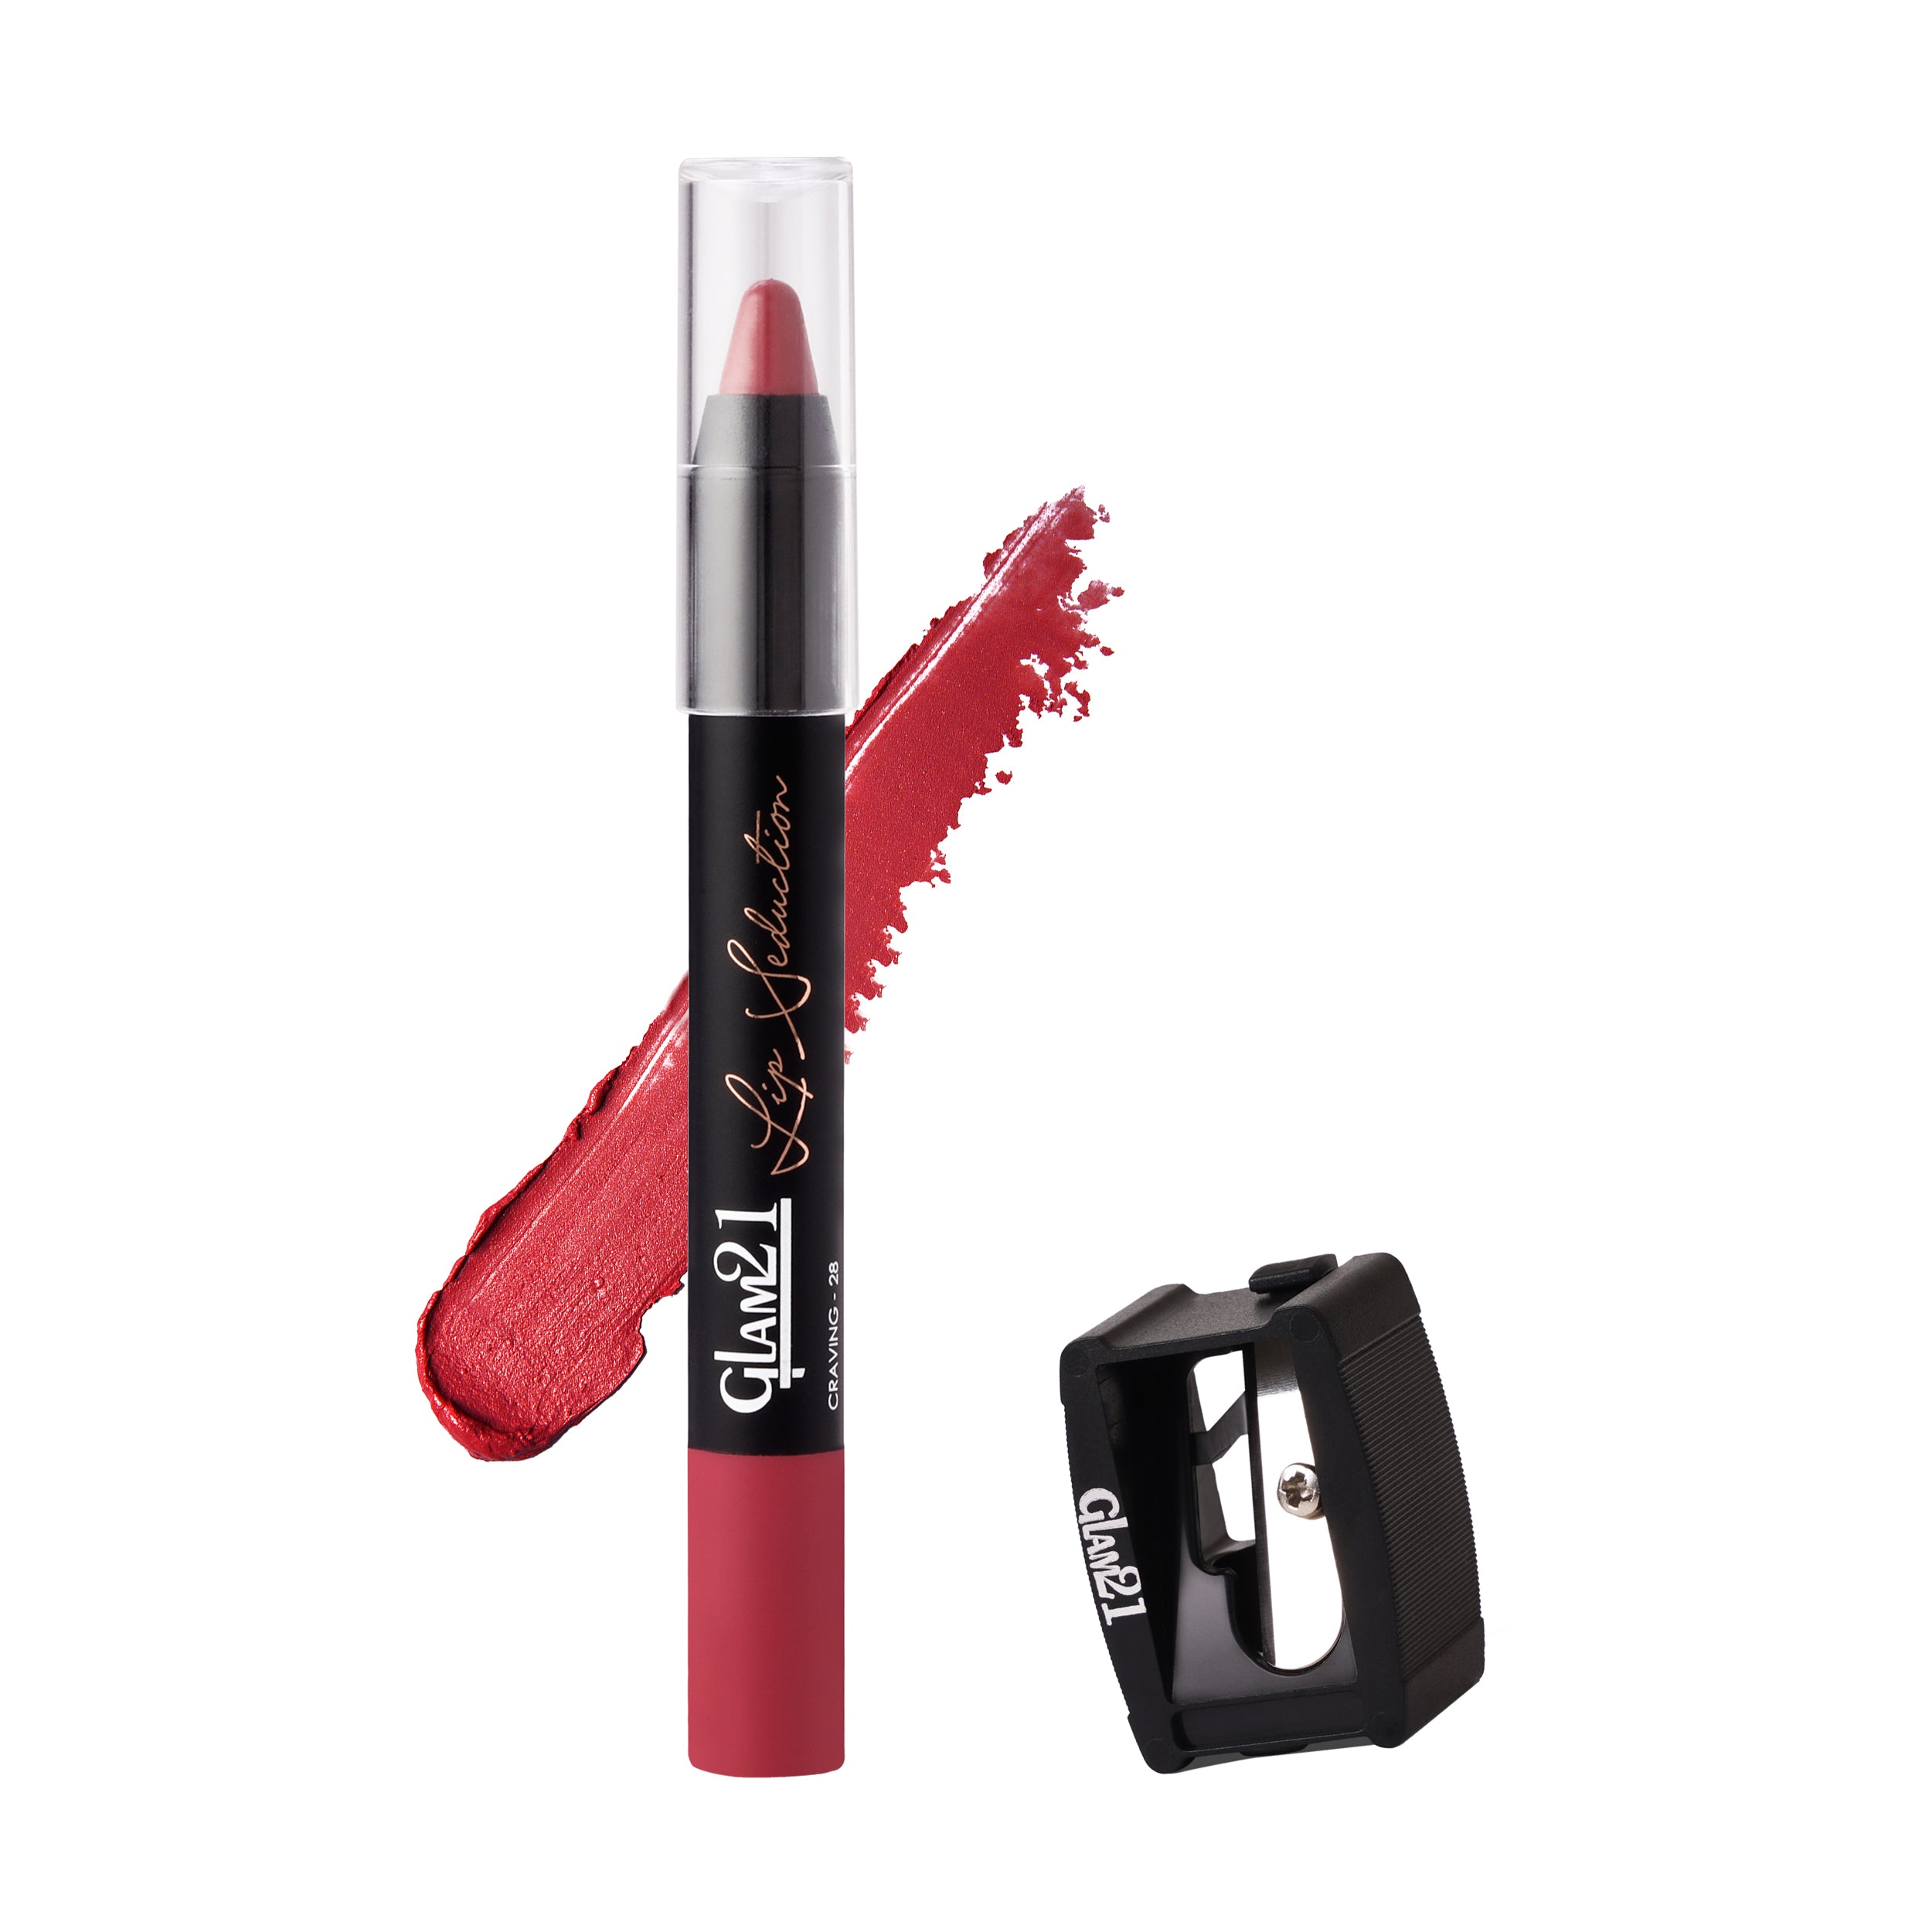 Glam21 Lip Seduction Non-Transfer Crayon Lipstick | Longlasting Creamy Matte Formula (Carving-28, 2.8 g)